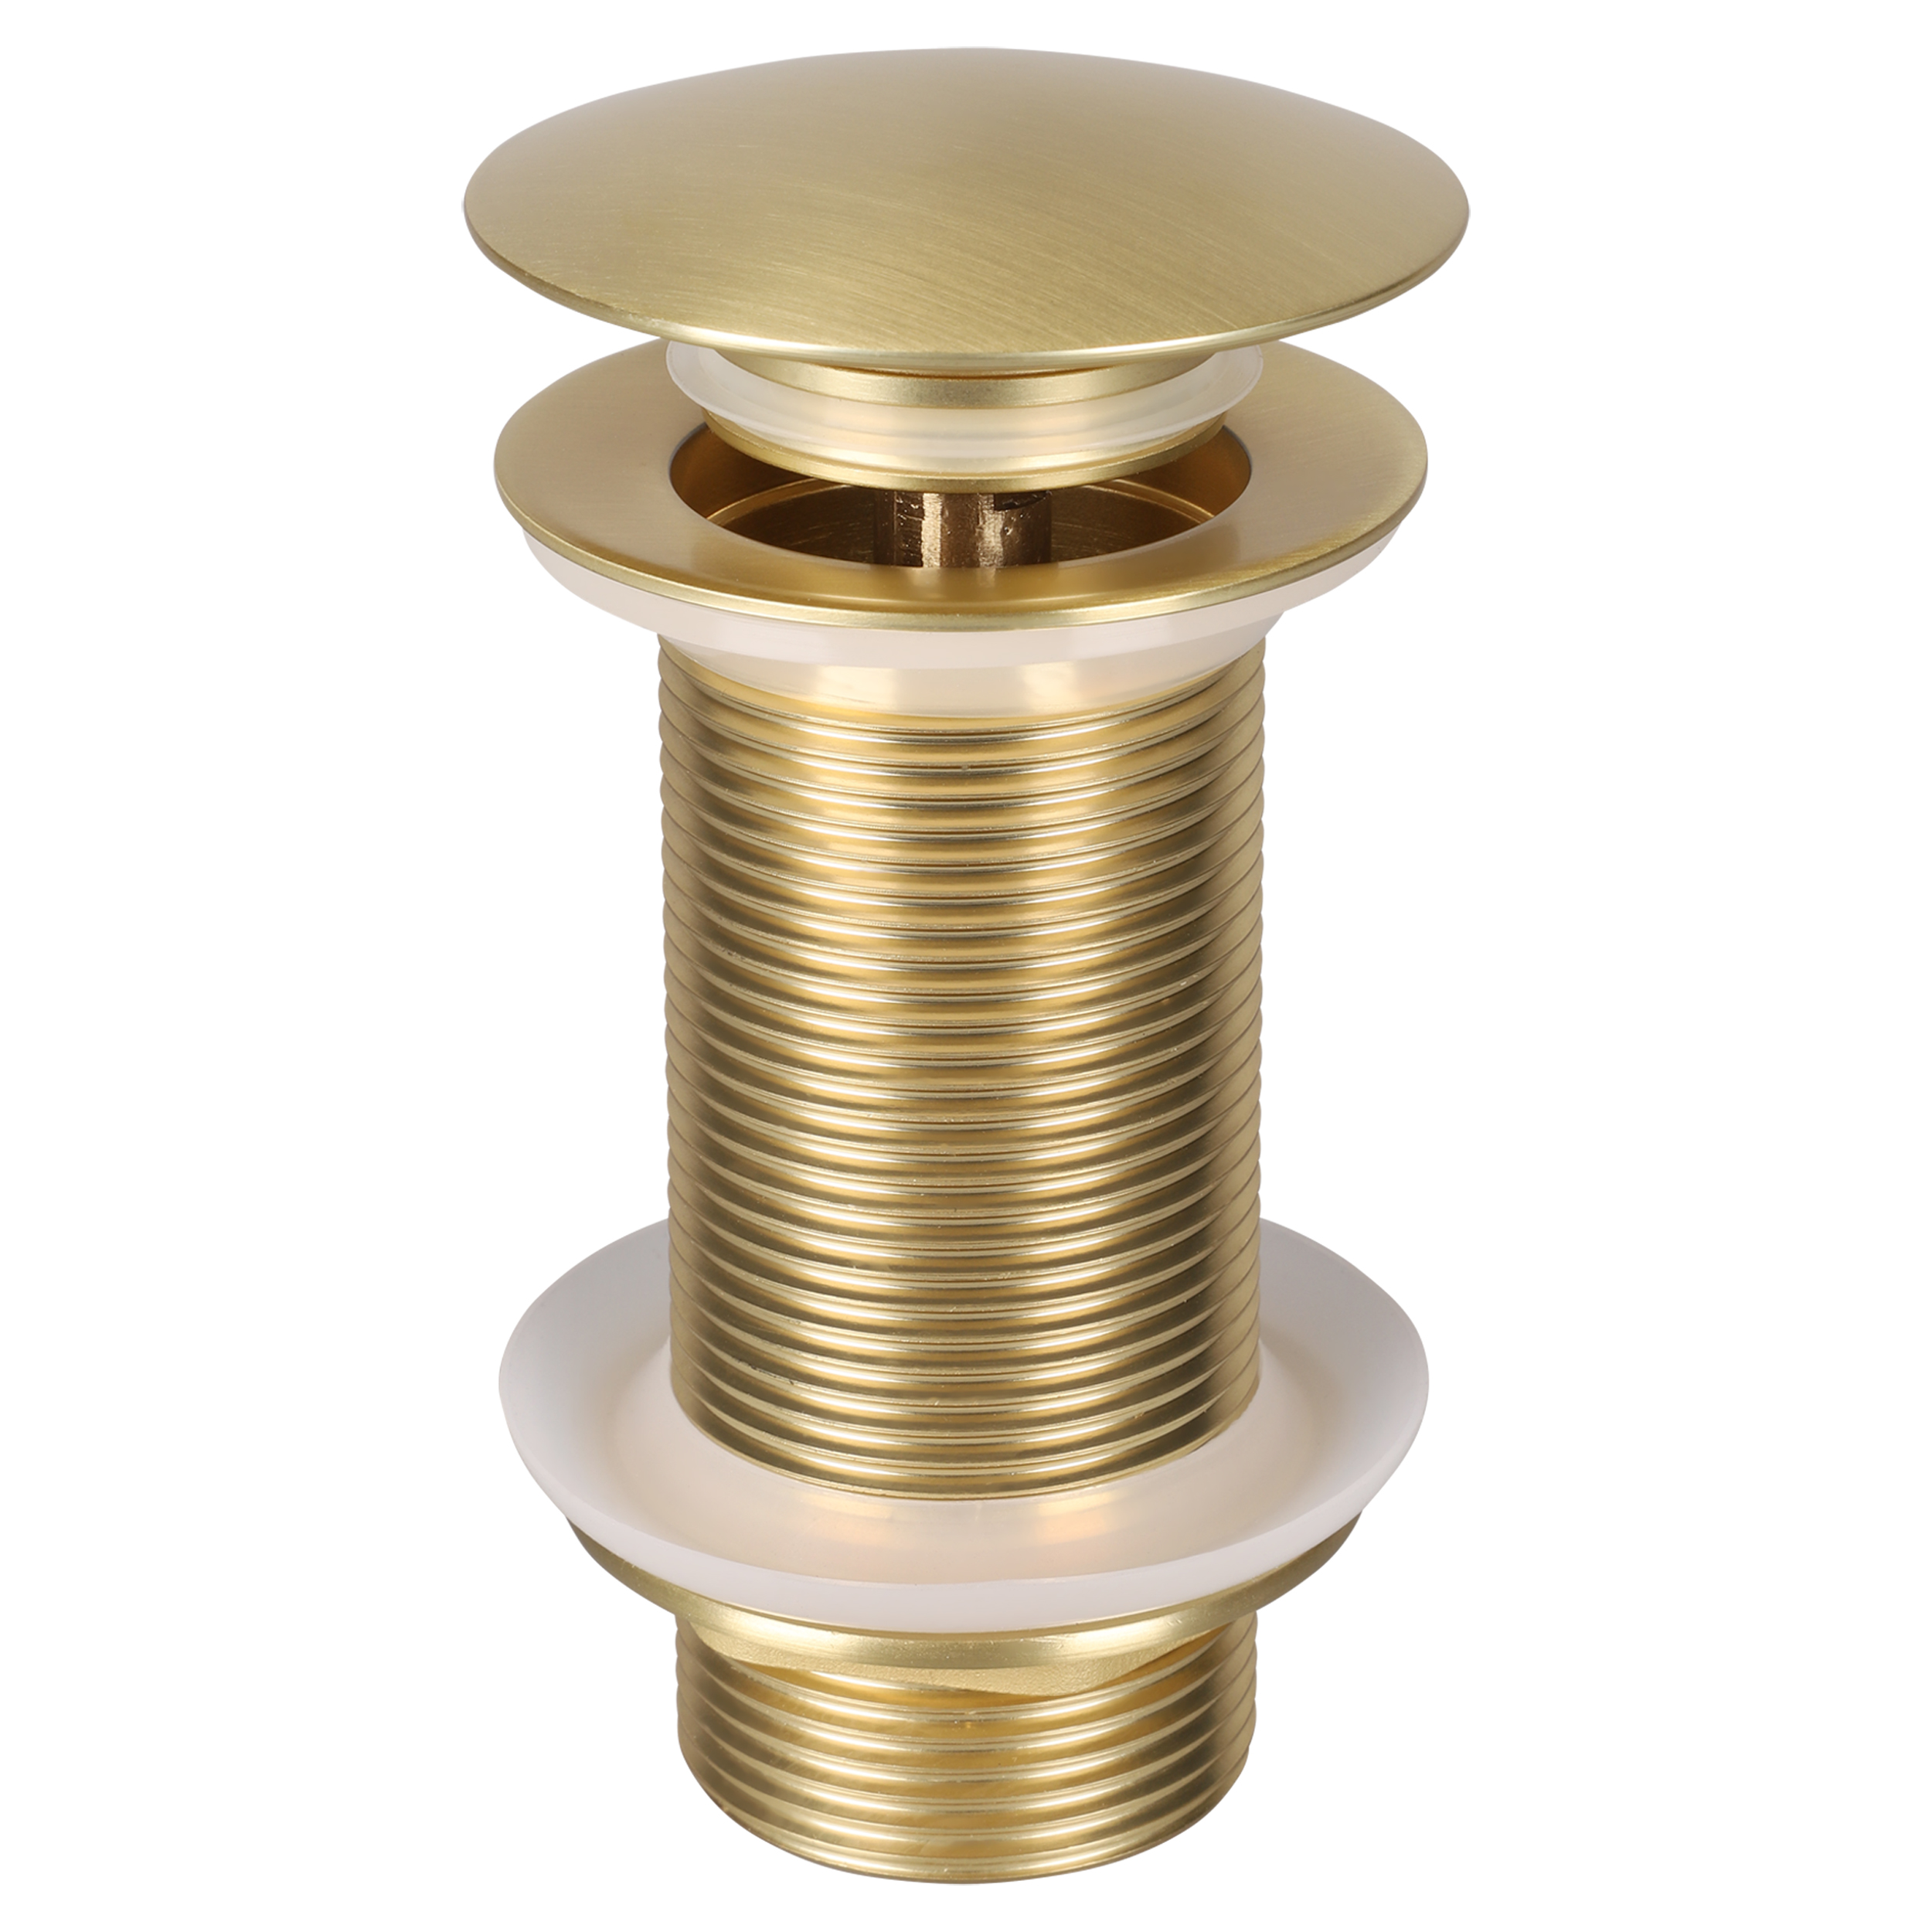 30.415.81 Differnz  afvoerplug pop up - design - large - Ø 66 mm x 98 mm - goud